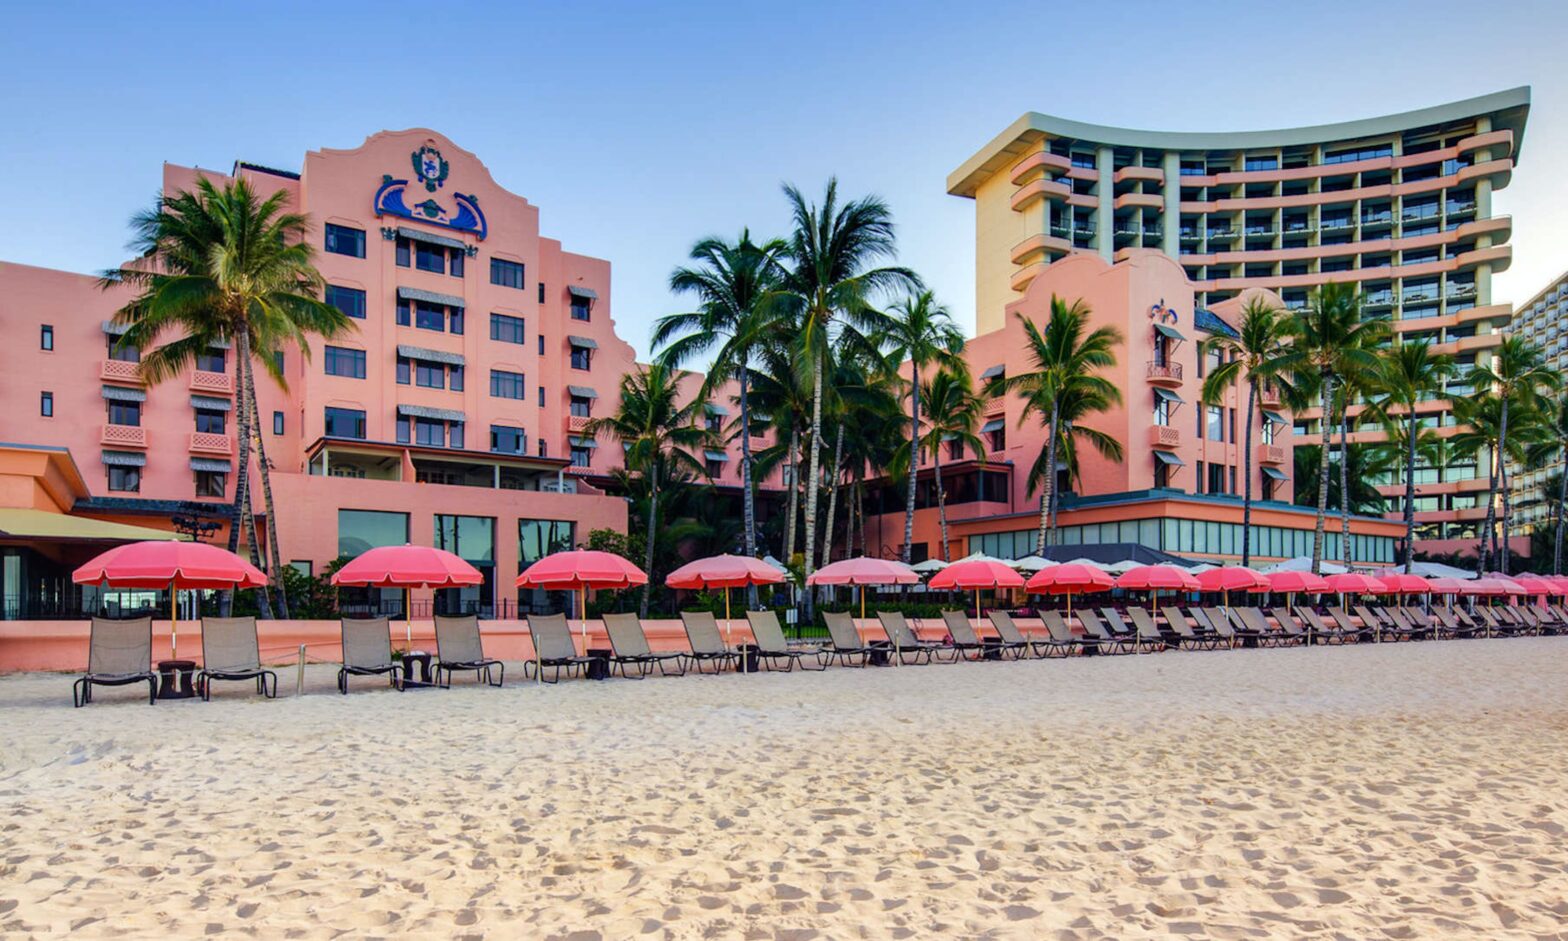 The Royal Hawaiian Hotel Barbiecore, pink hotel property